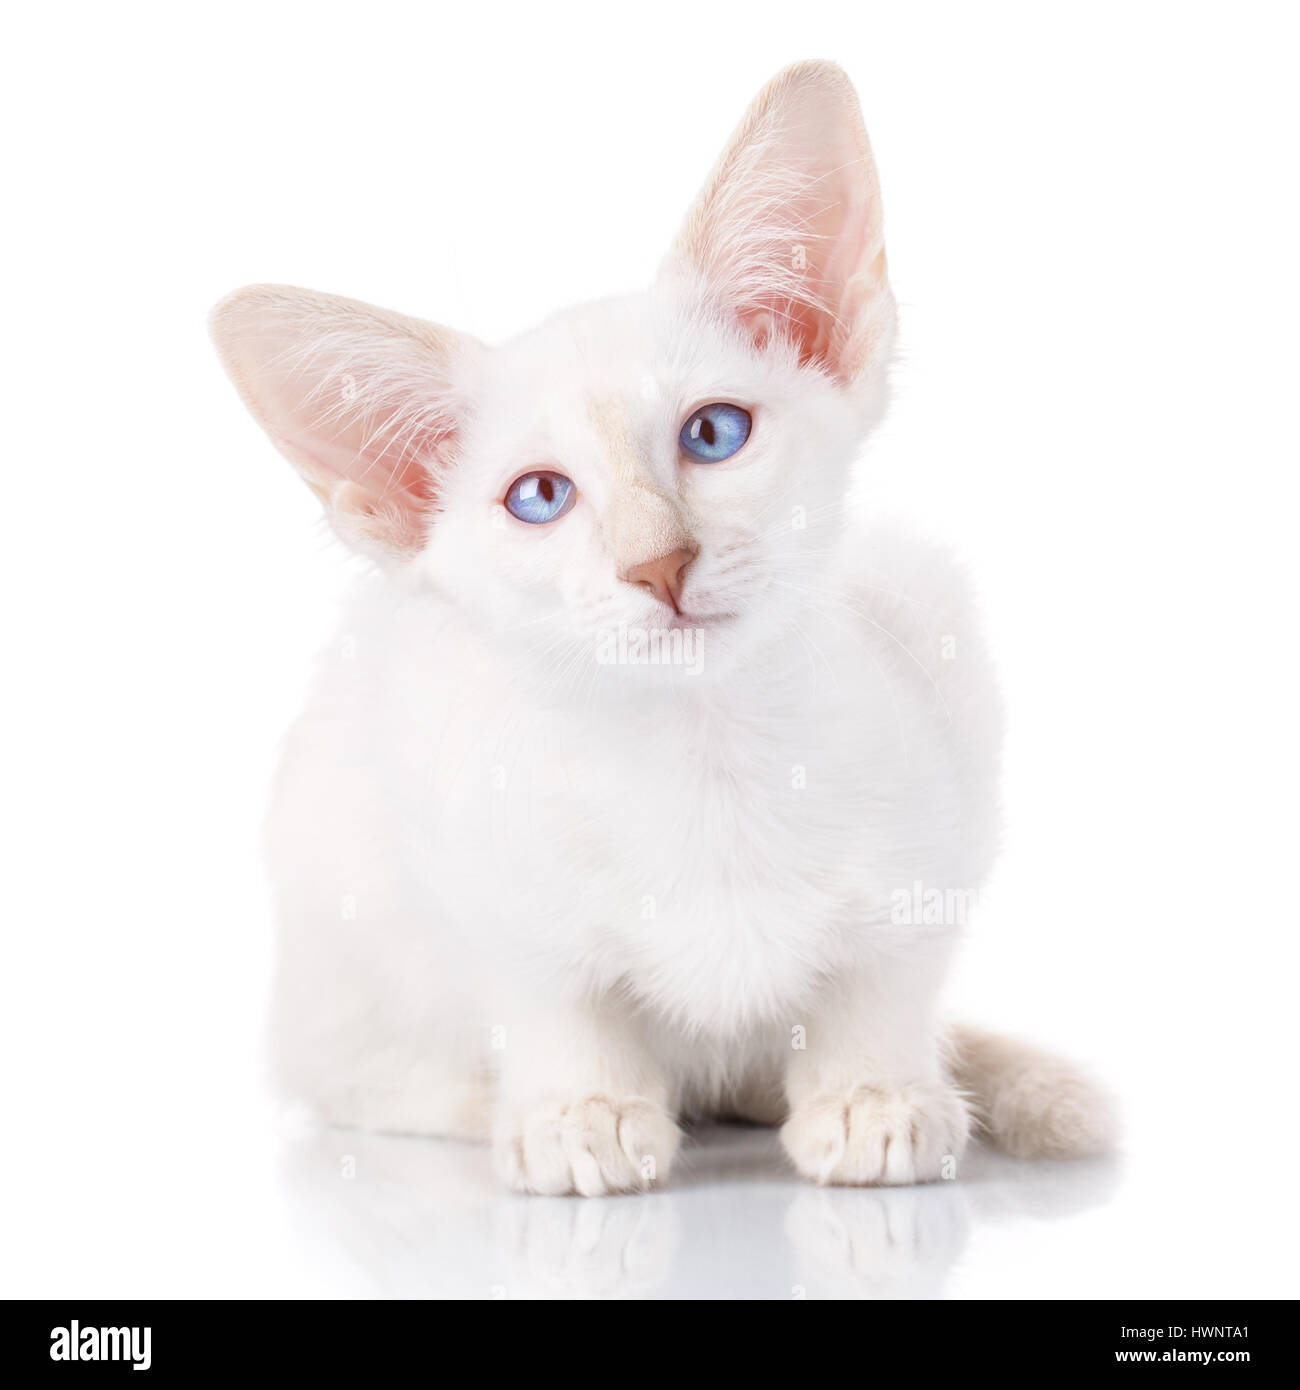 Blue-point siamese cat portrait Stock Photo